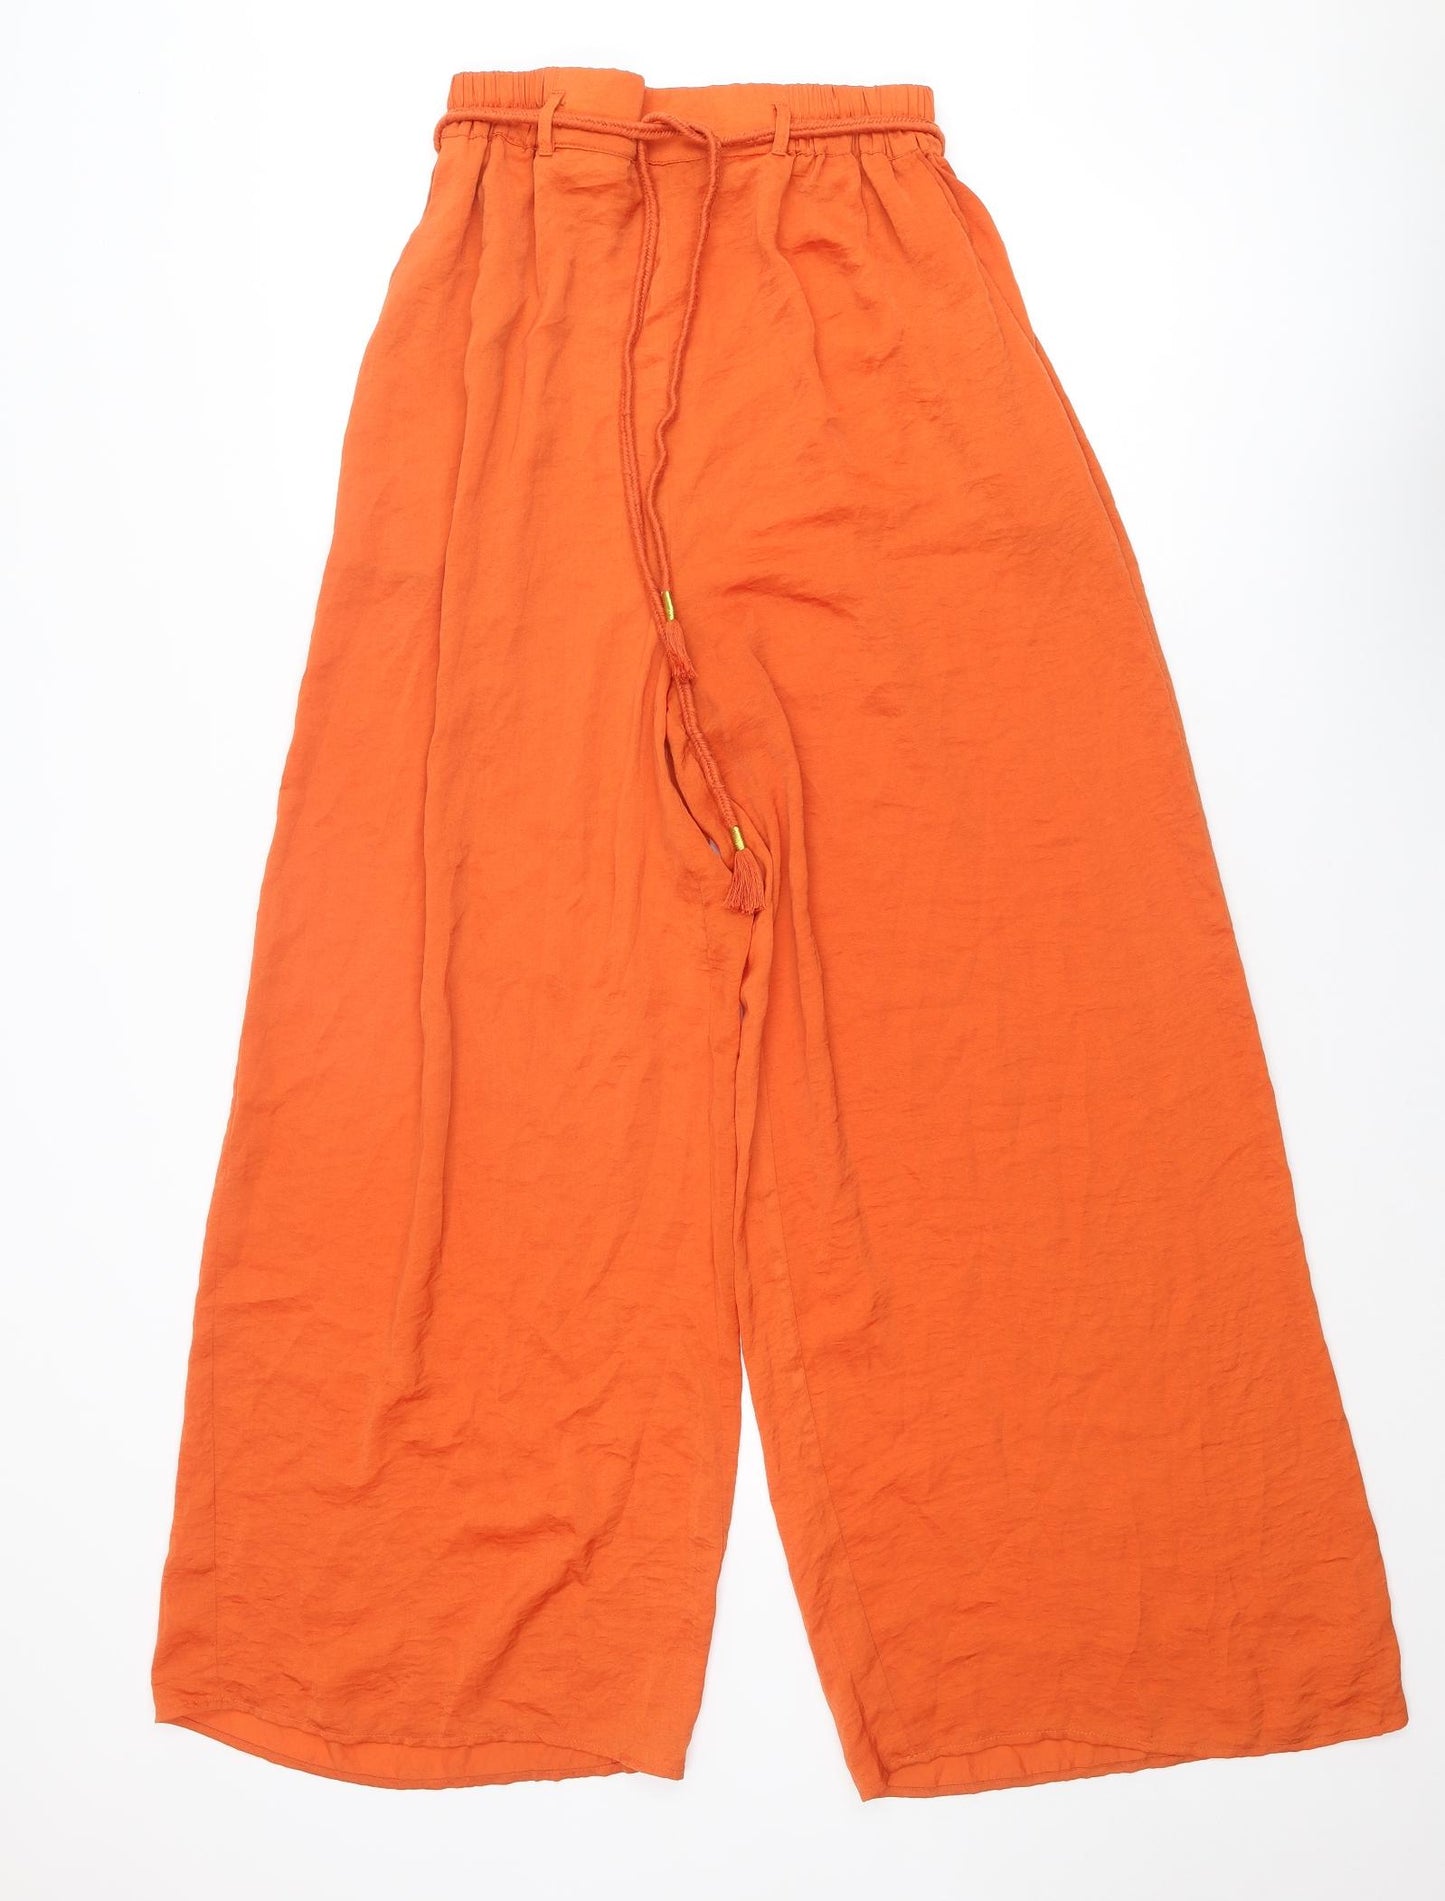 Sfera Womens Orange Polyester Trousers Size M L29 in Regular Tie